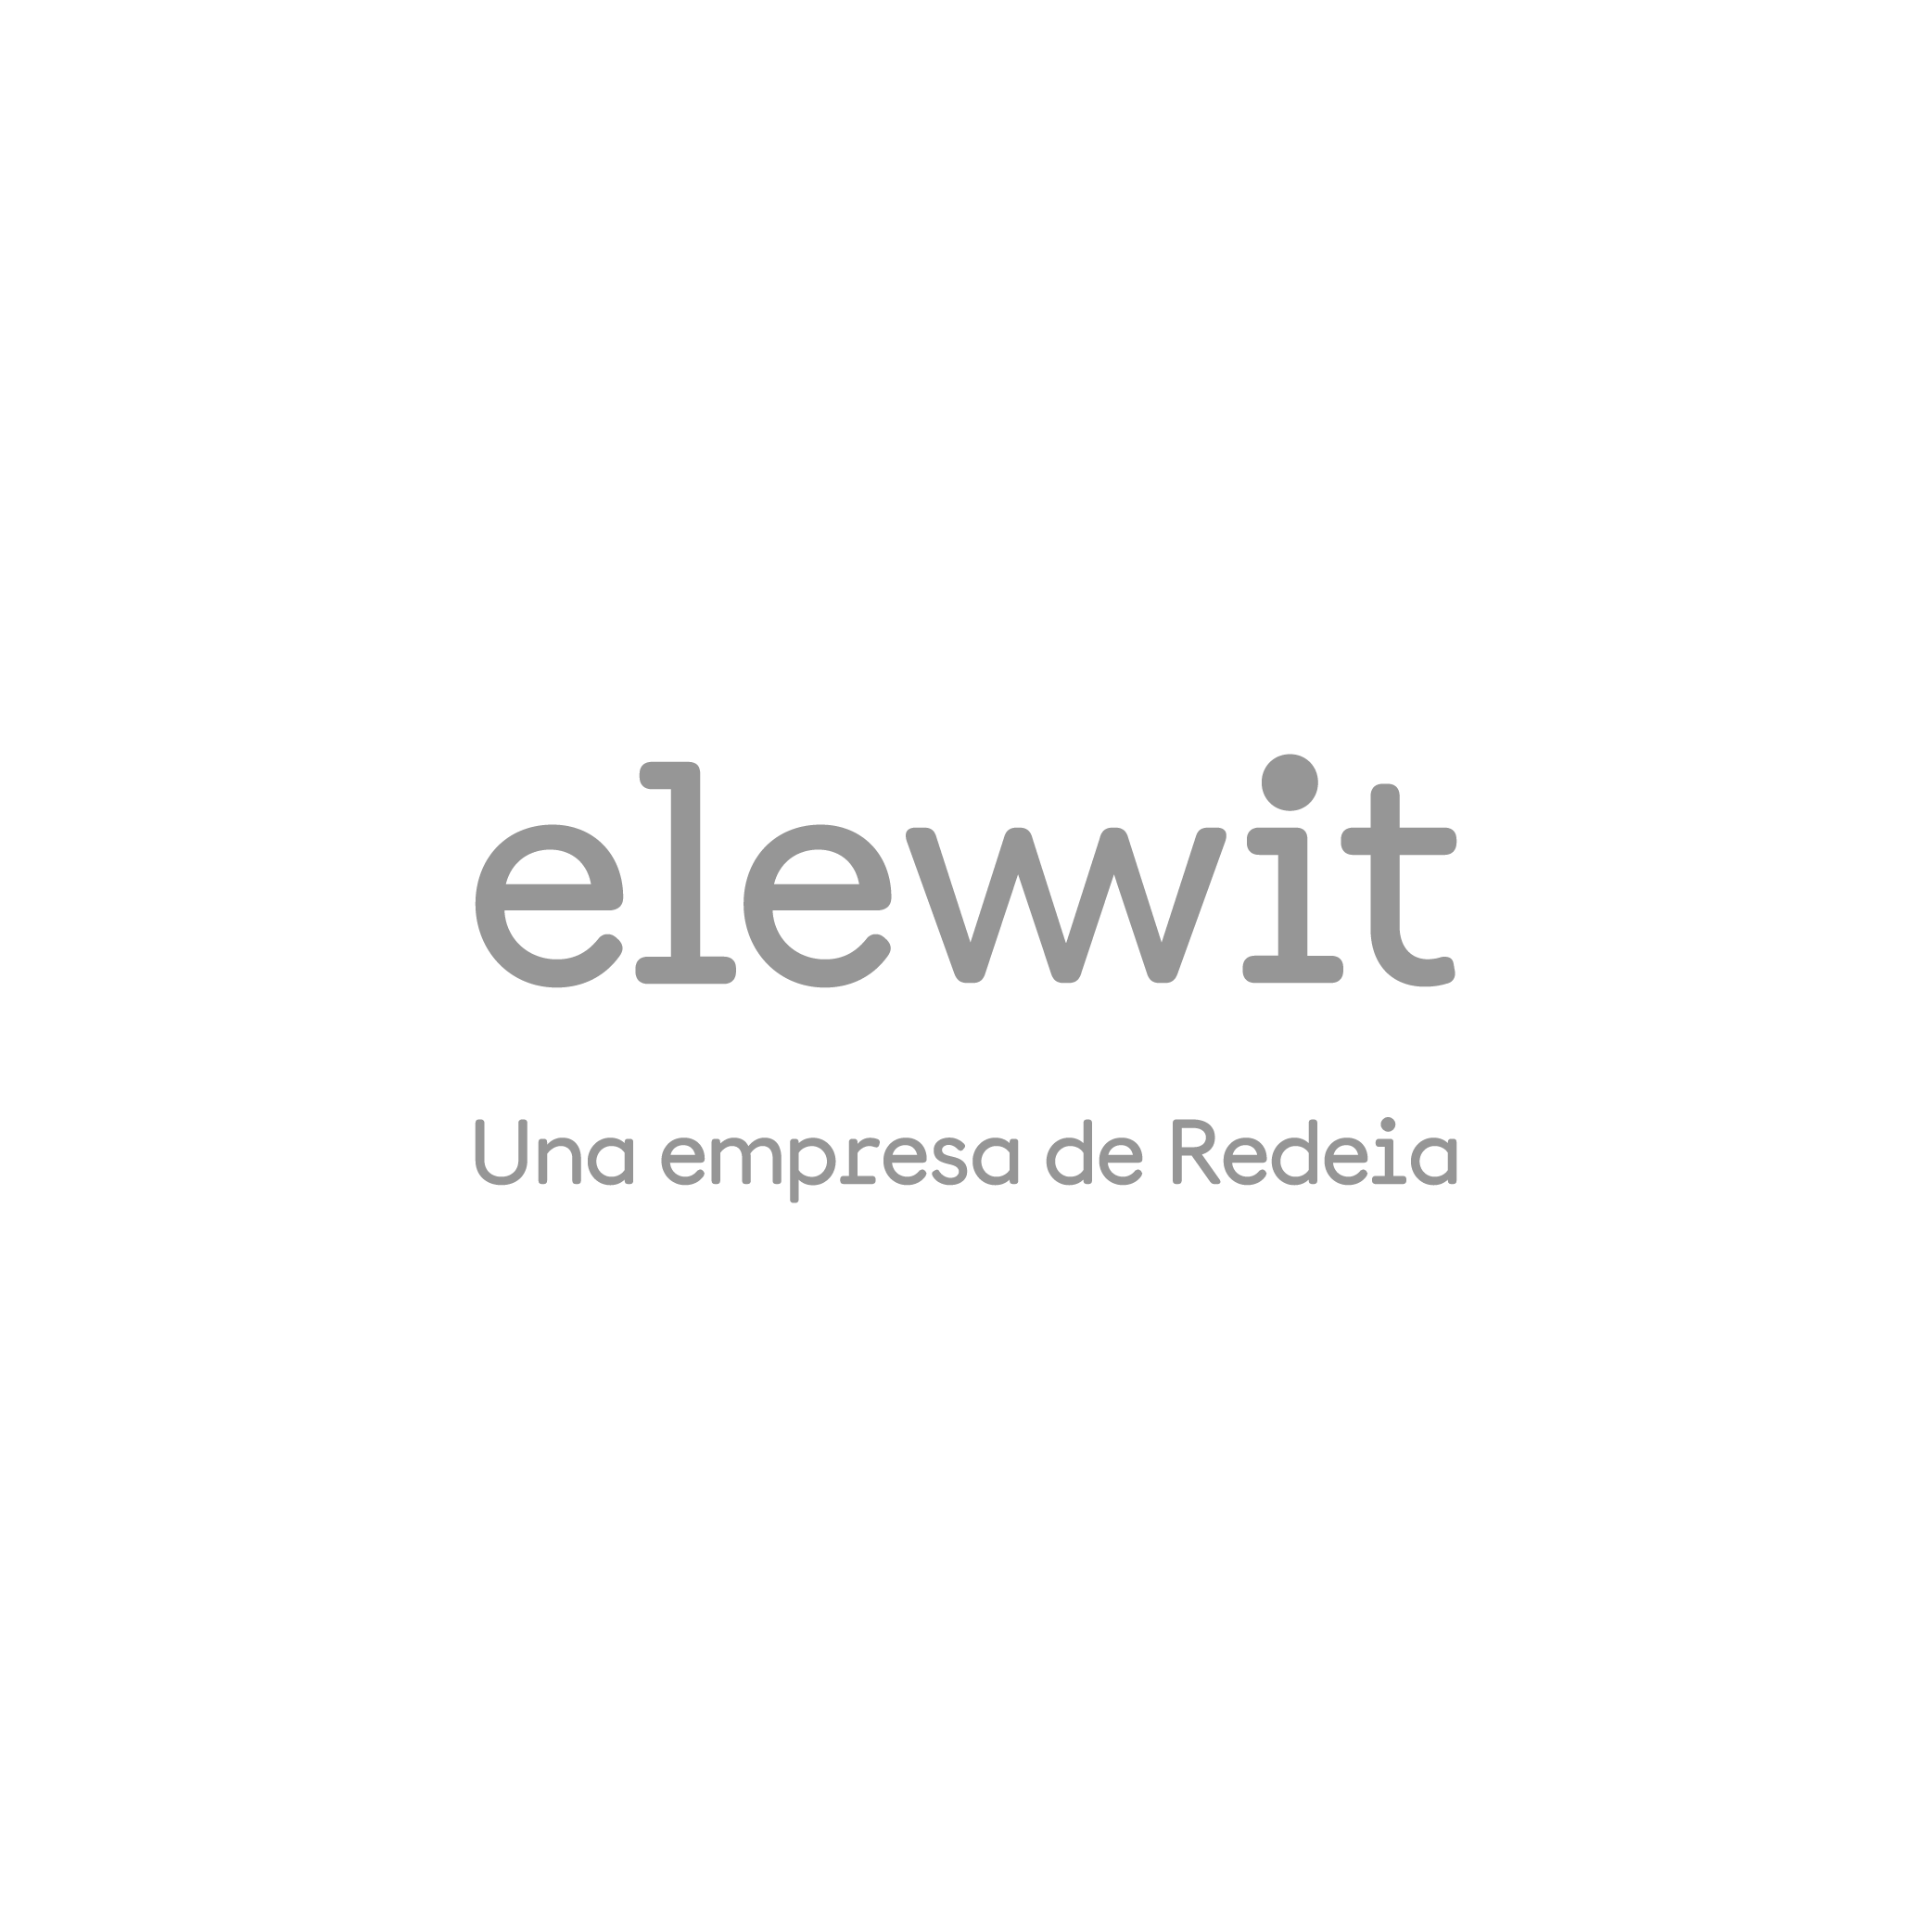 Elewit